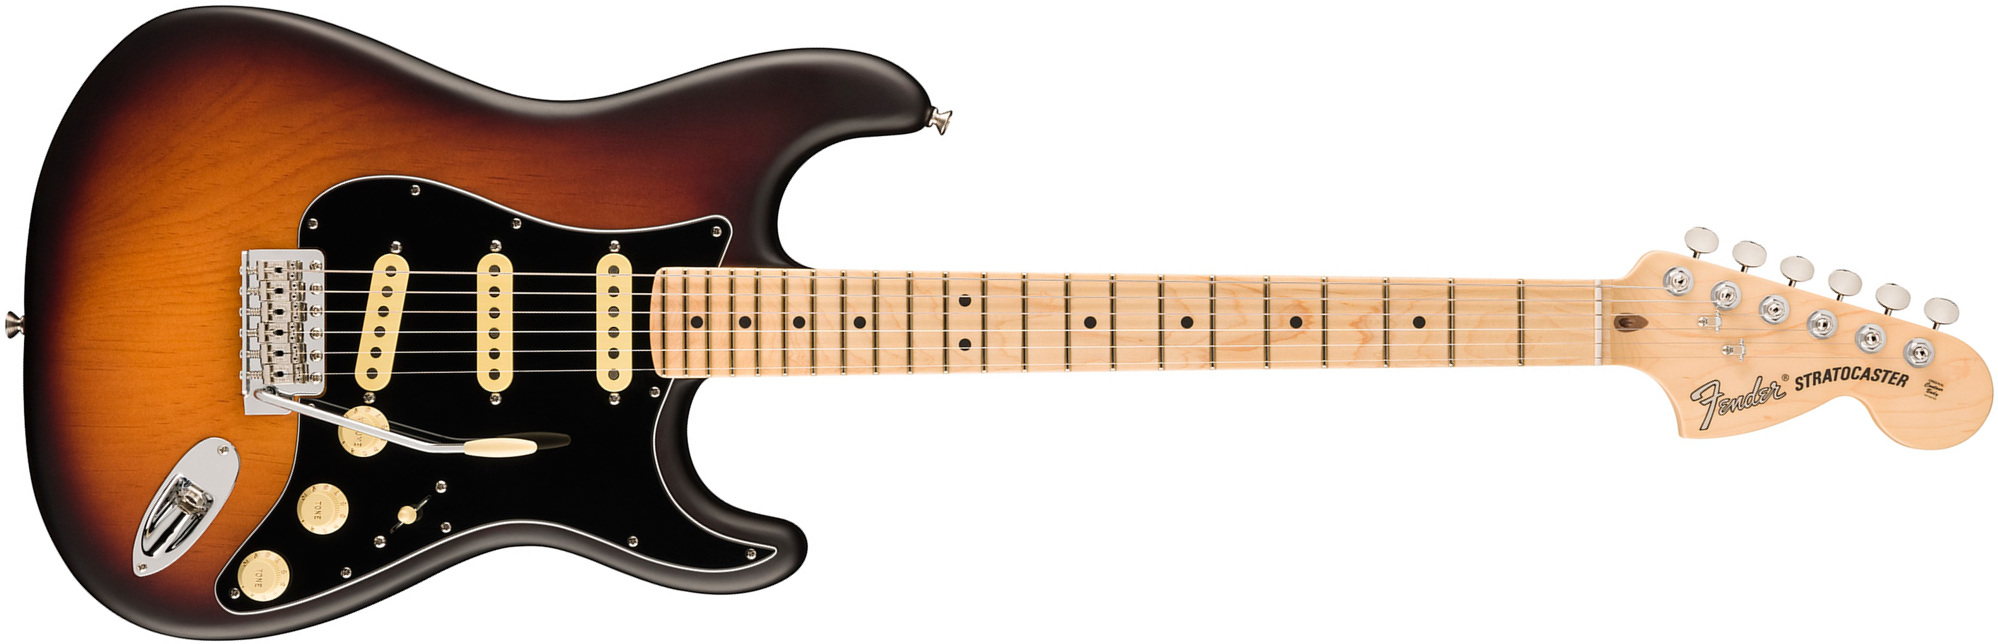 Fender Strat American Performer Timber Collection Fsr Usa 3s Mn - Satin 2-color Sunburst - Elektrische gitaar in Str-vorm - Main picture